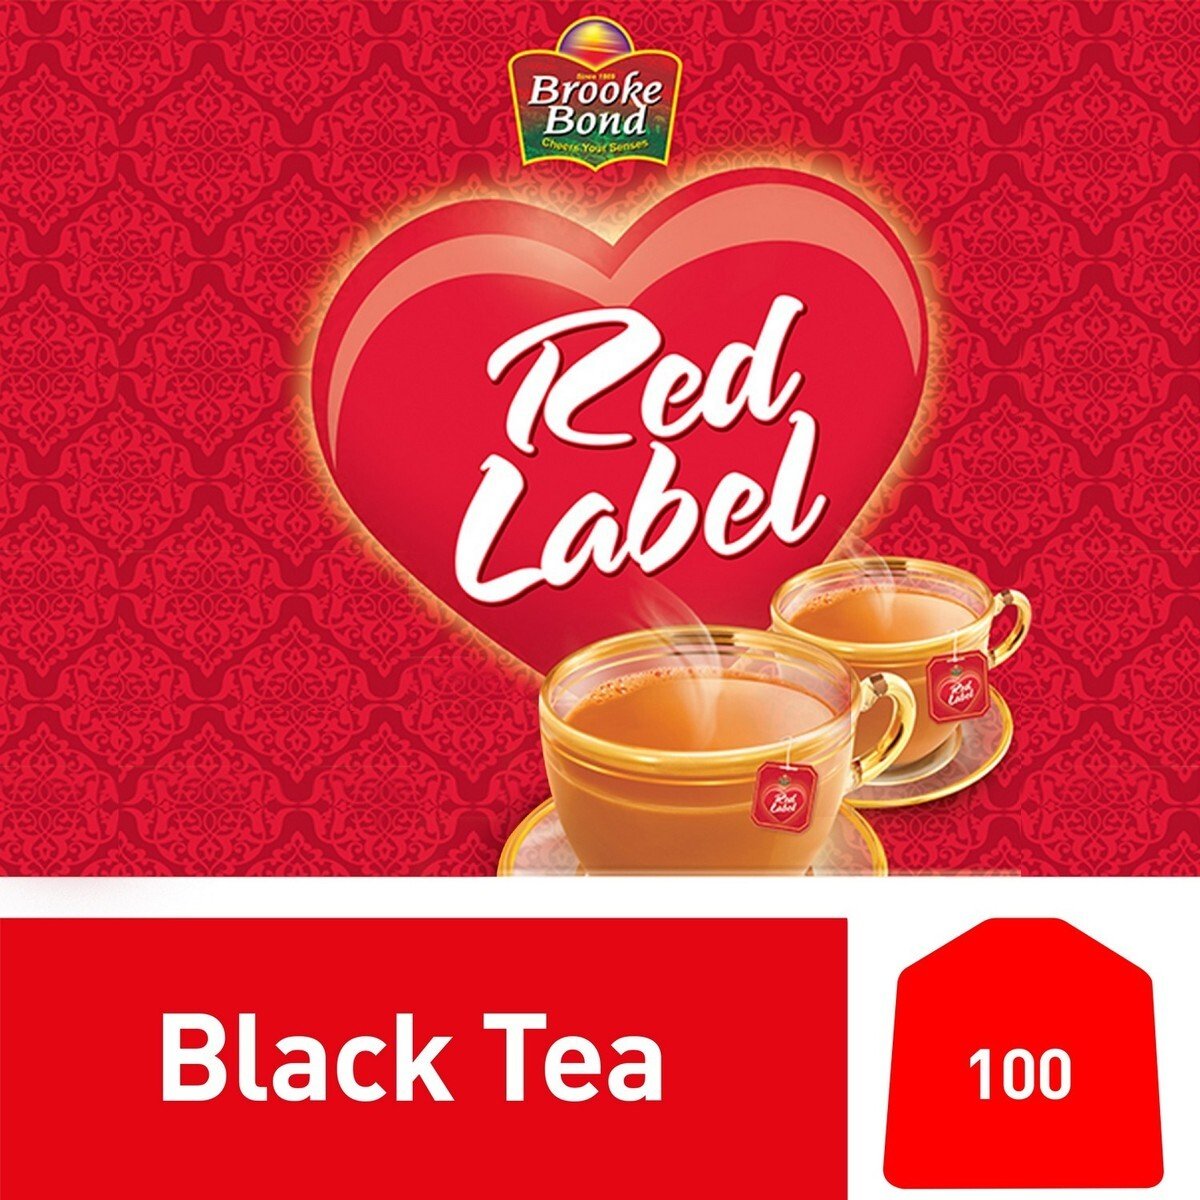 Brooke Bond Red Label Black Tea Bags 100pcs